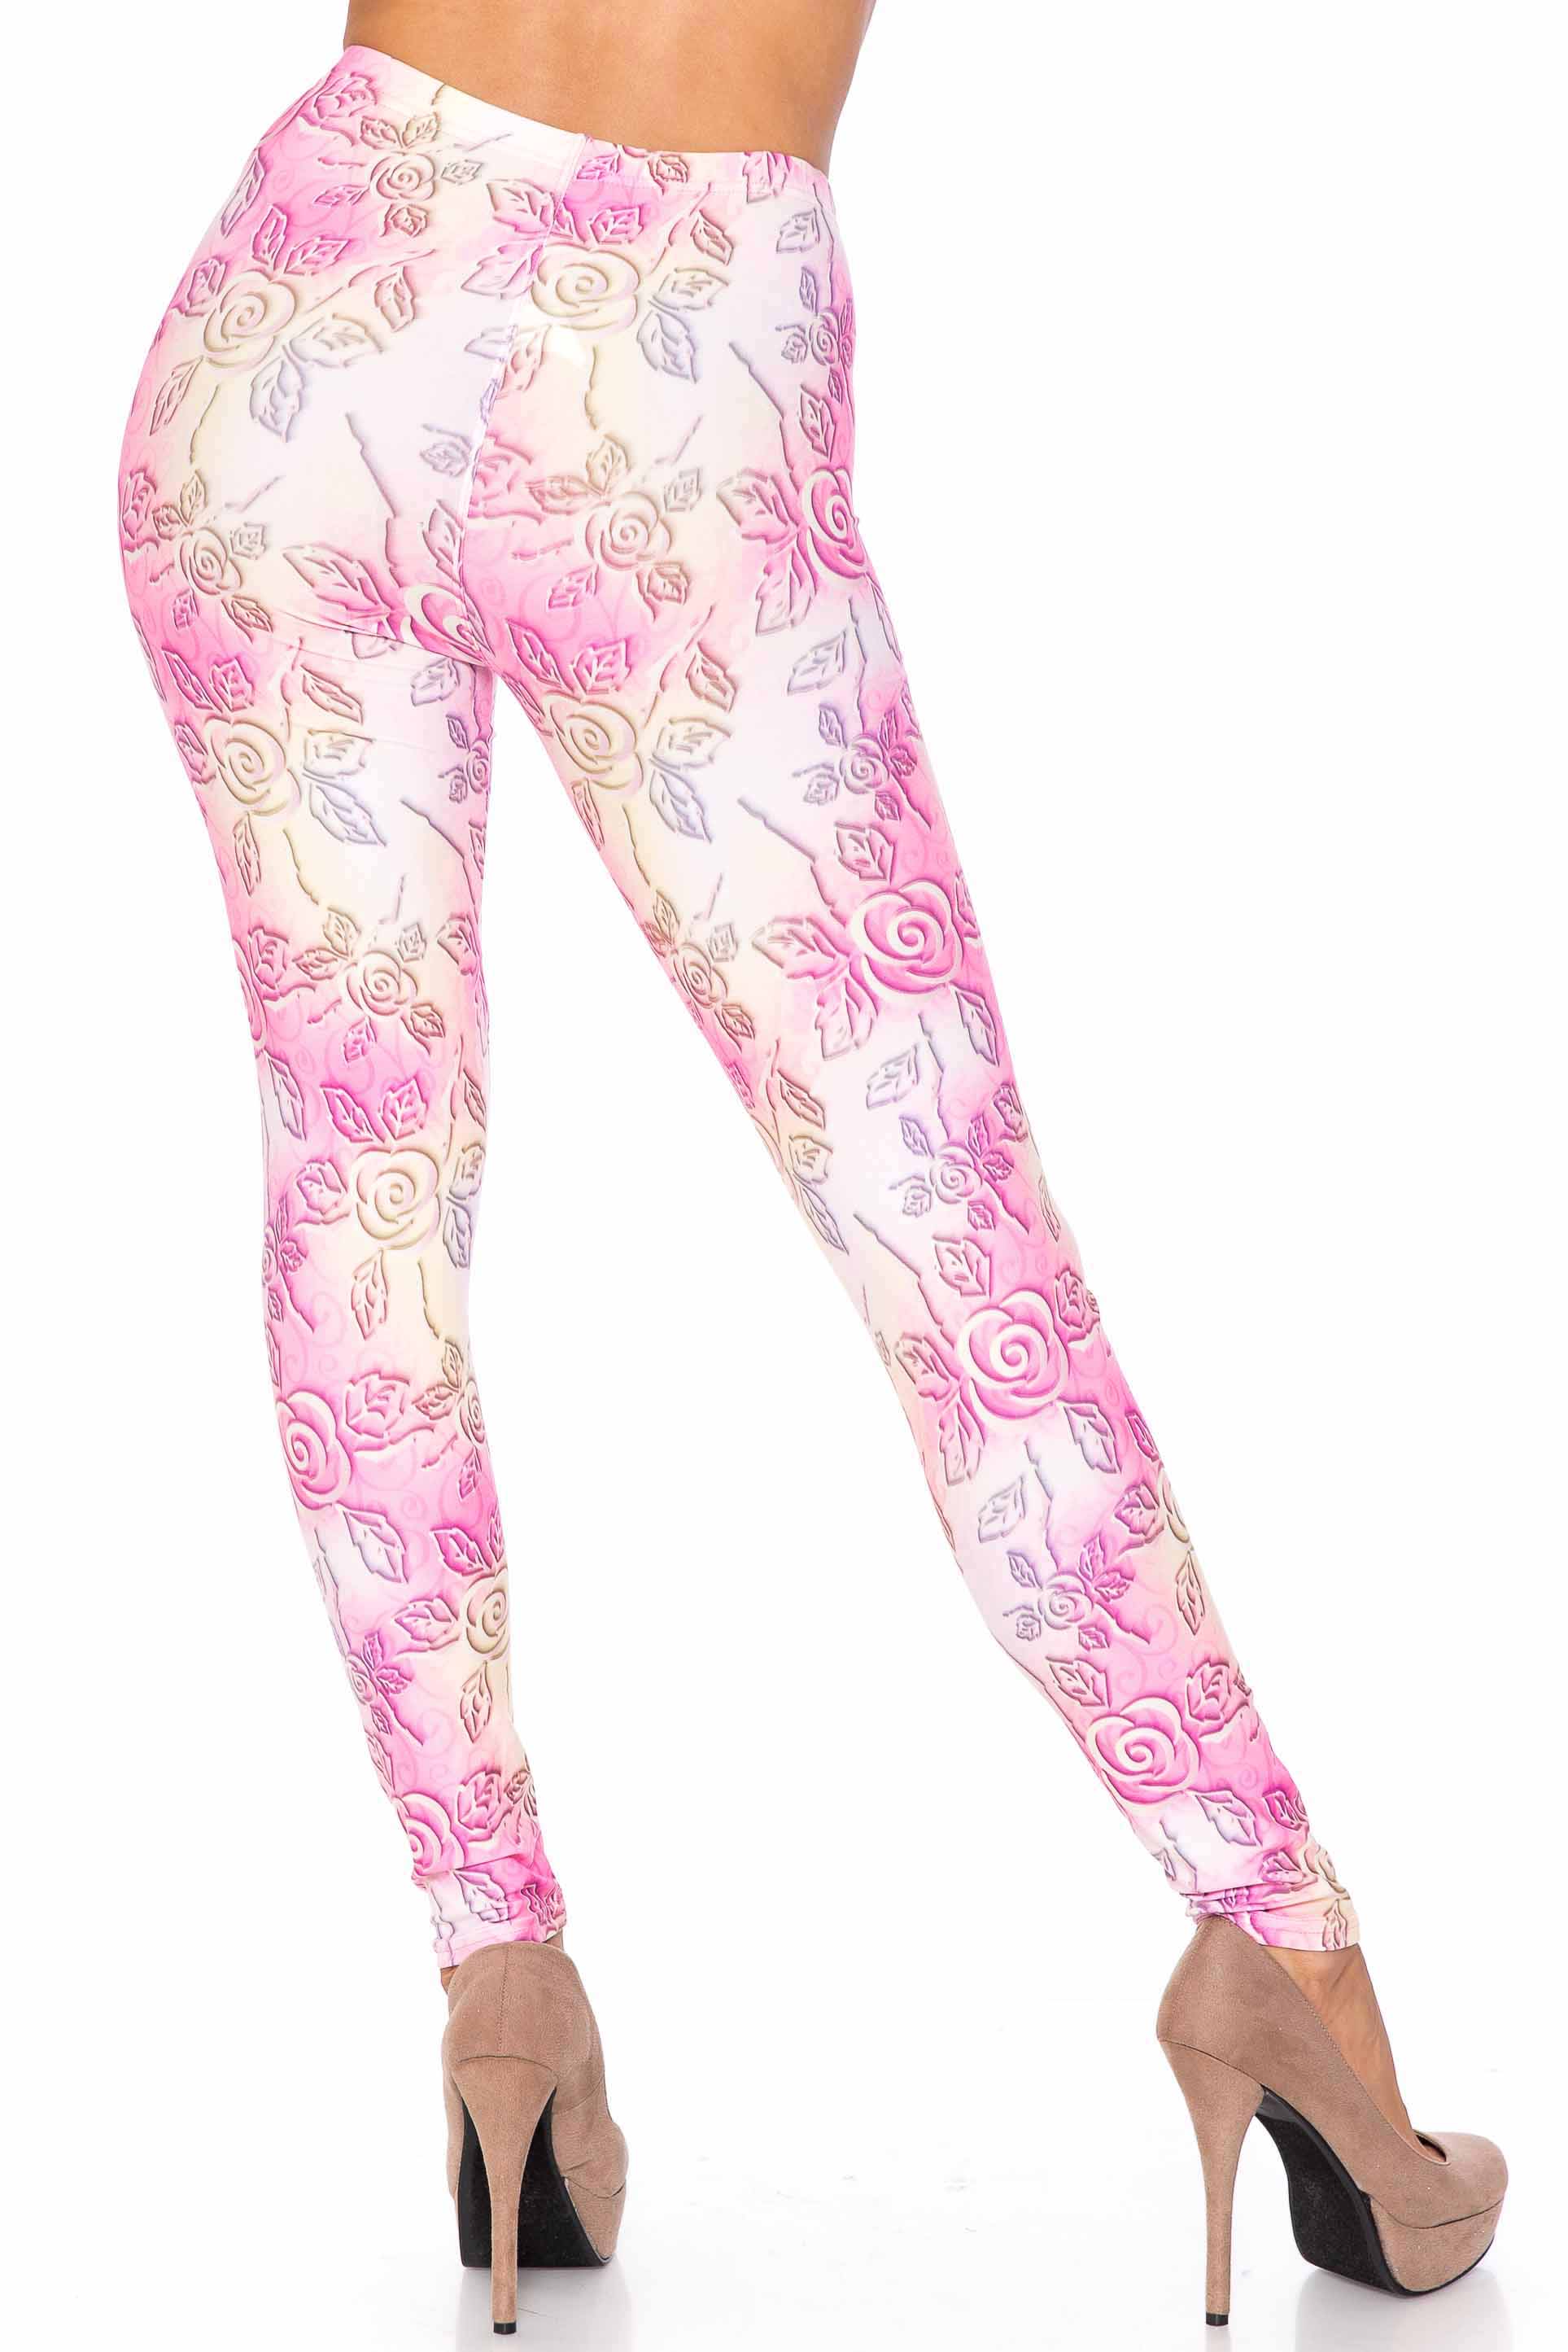 Wholesale Creamy Soft 3D Pastel Ombre Rose Extra Plus Size Leggings - USA Fashion™